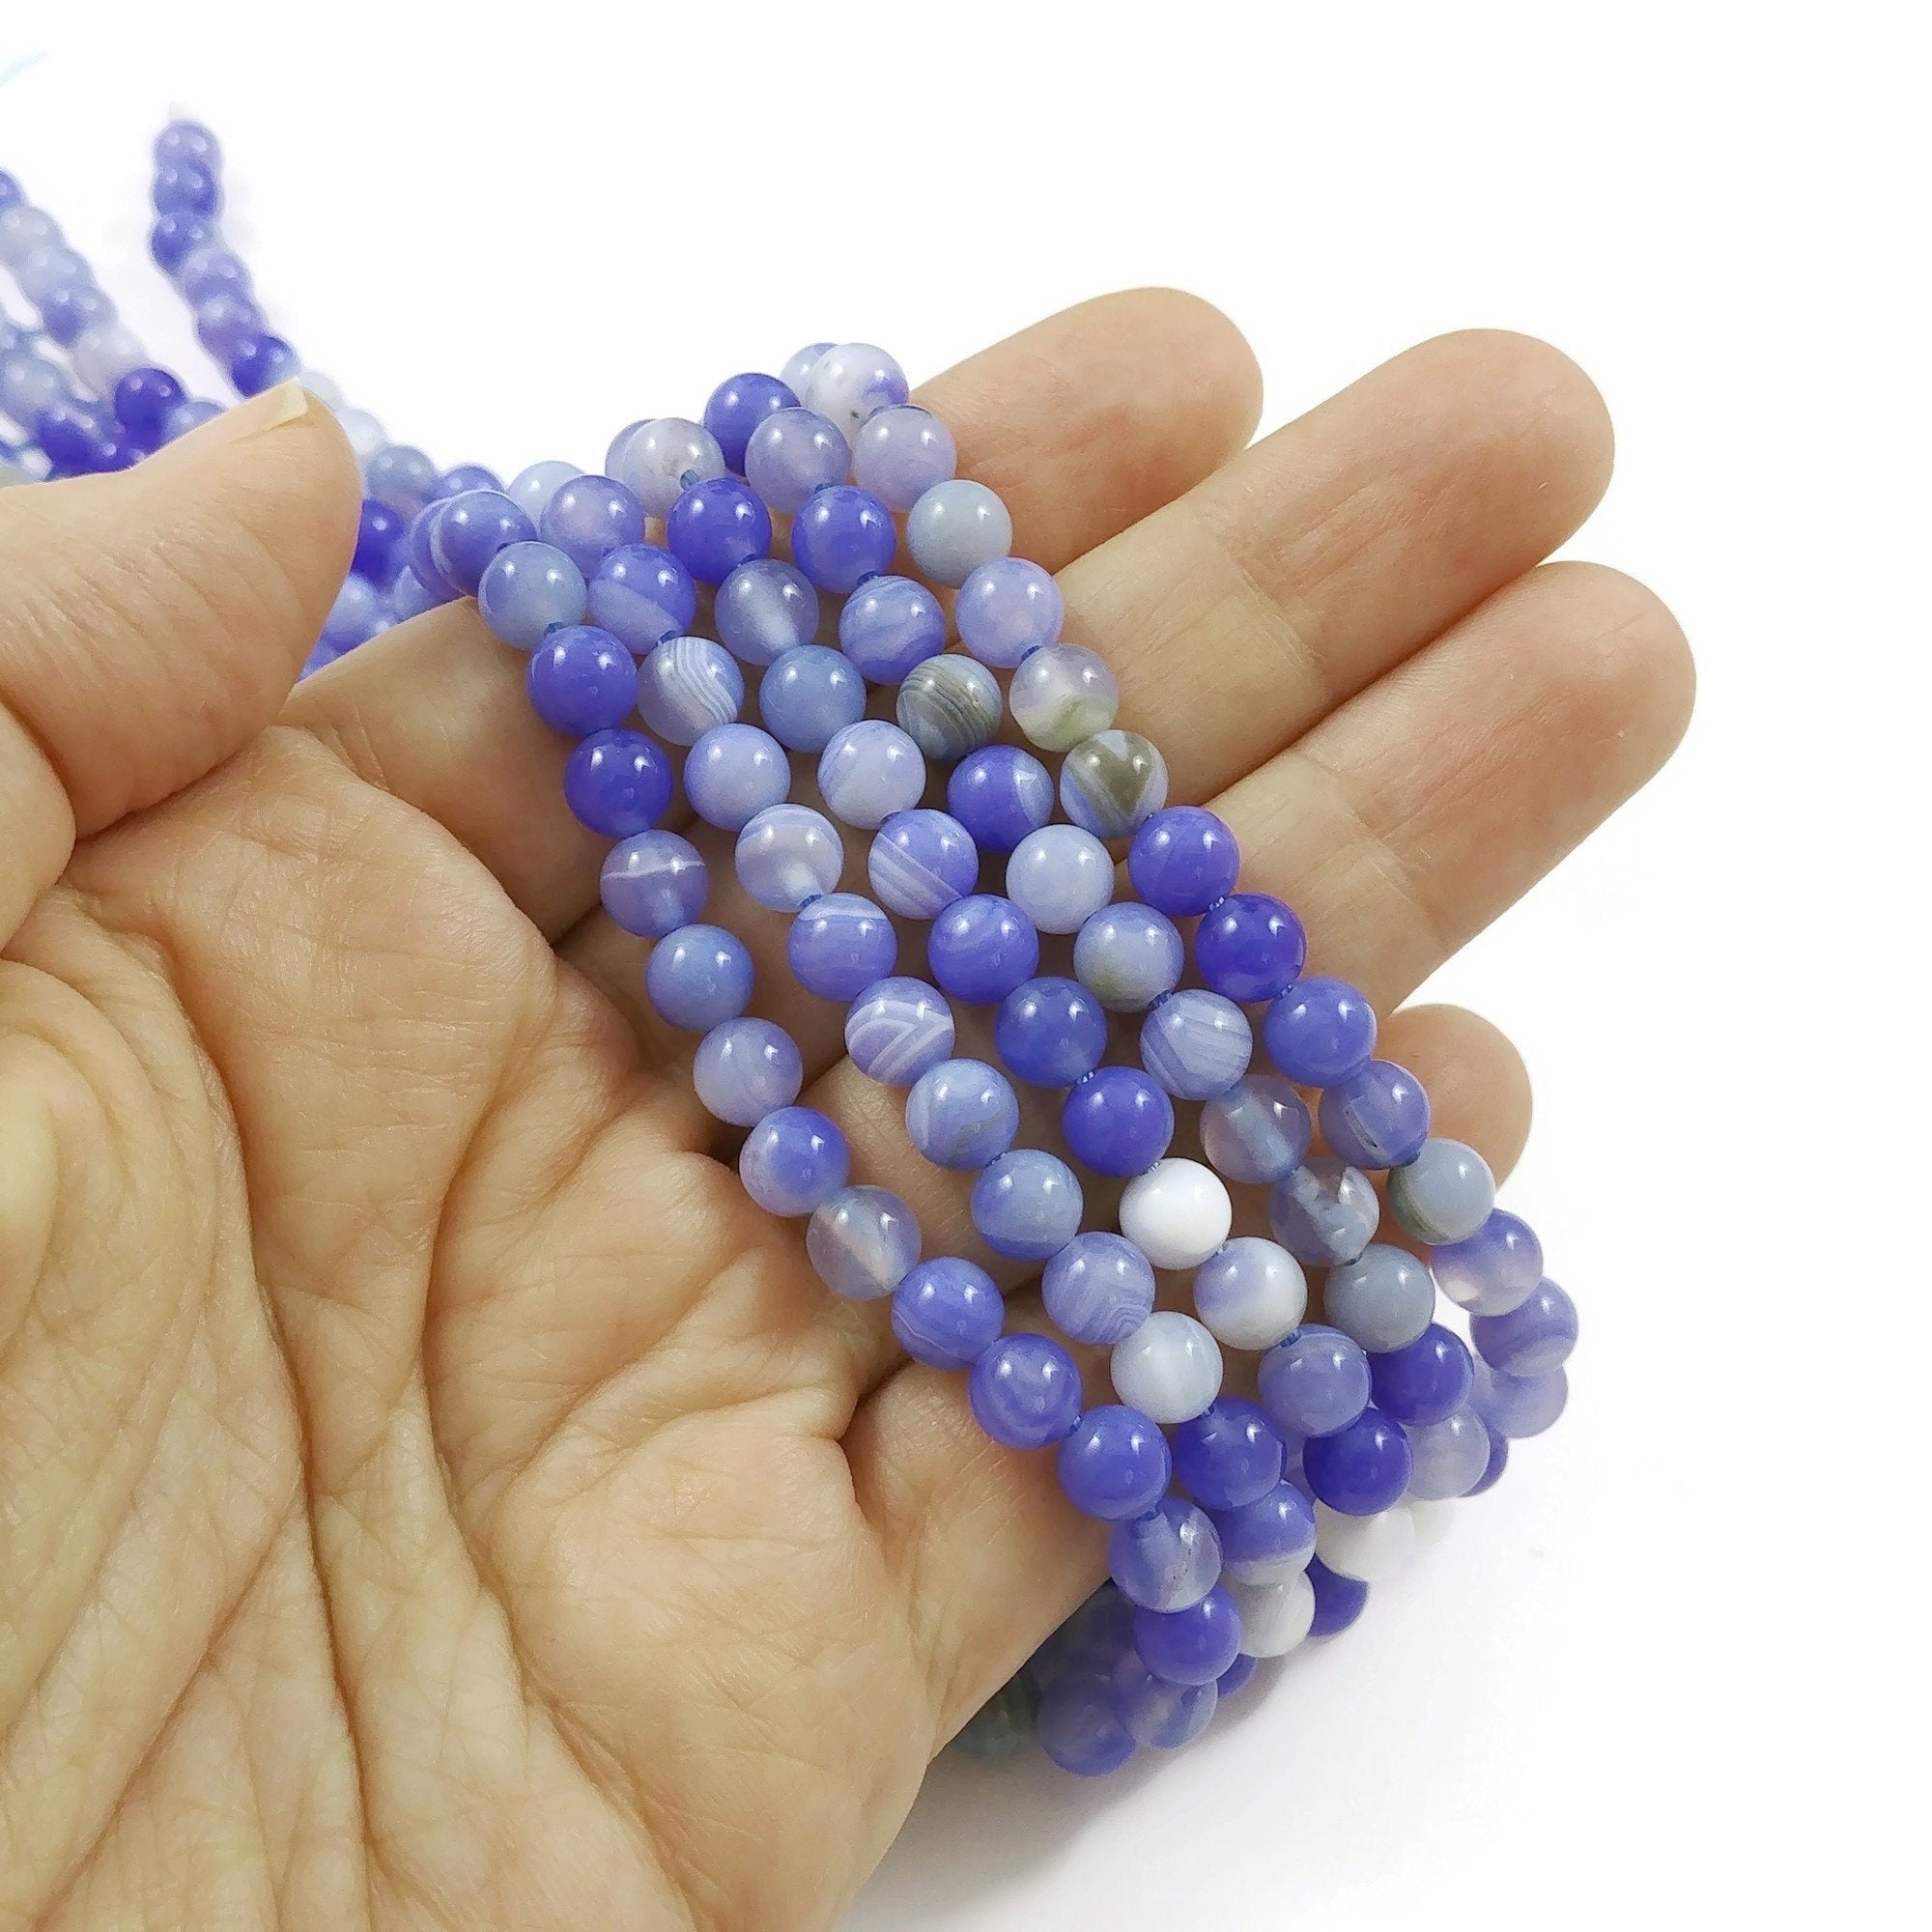 Natural blue chalcedony beads, 6mm round gemstone beads, Jewelry making strand